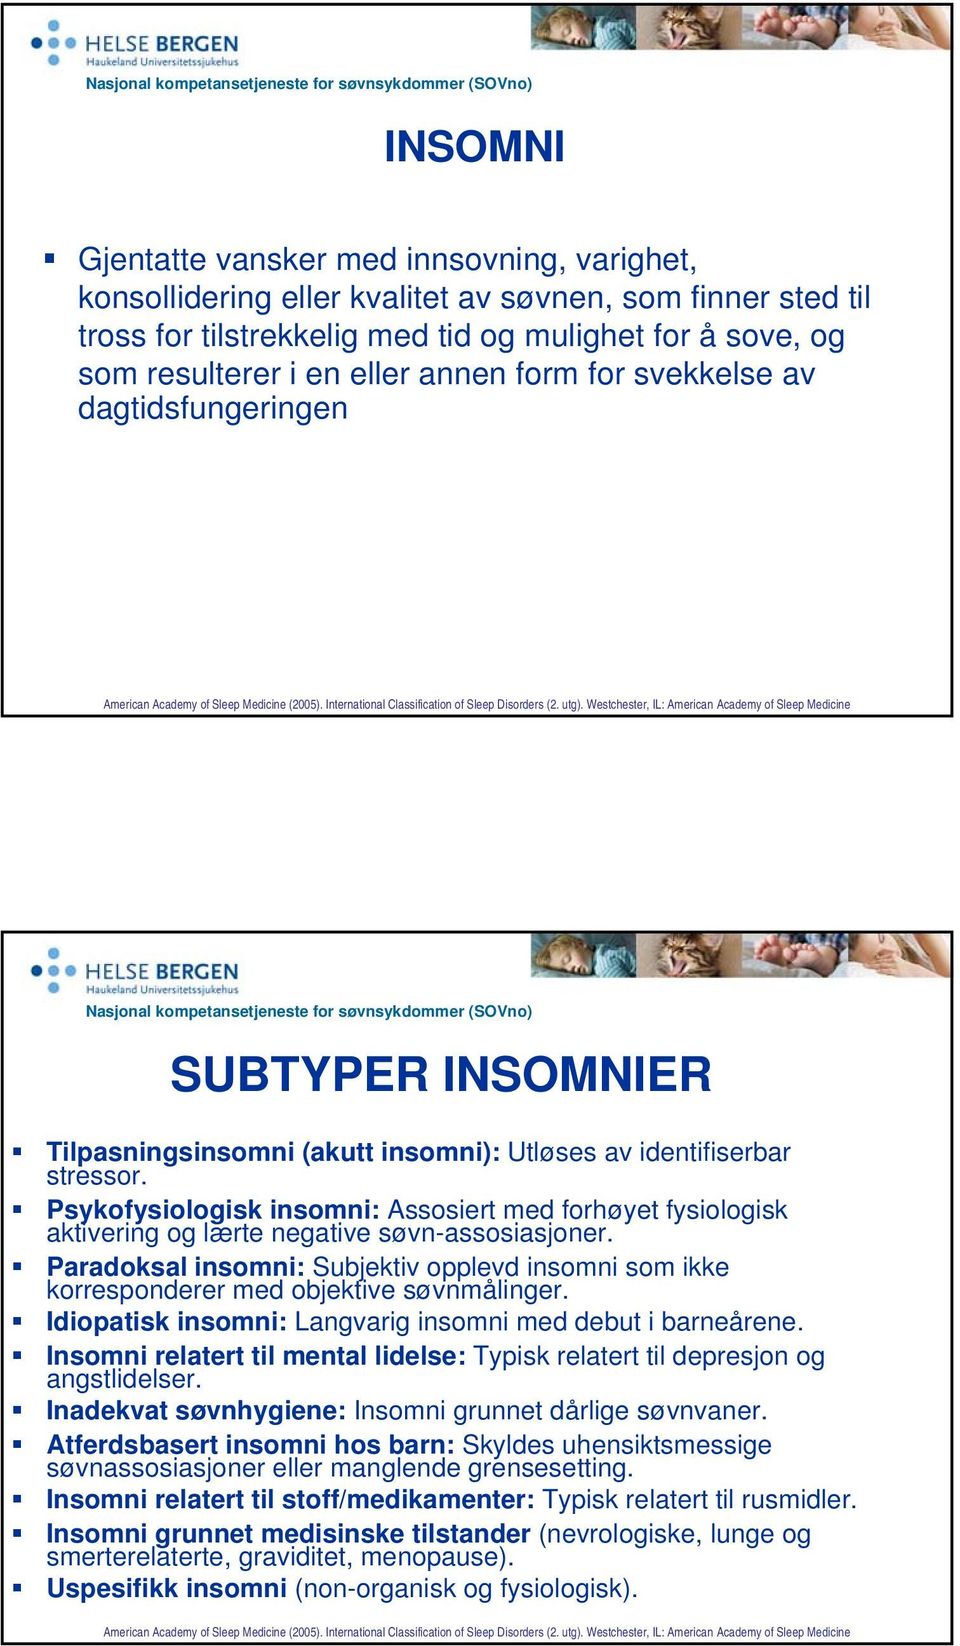 Westchester, IL: American Academy of Sleep Medicine SUBTYPER INSOMNIER Tilpasningsinsomni (akutt insomni): Utløses av identifiserbar stressor.